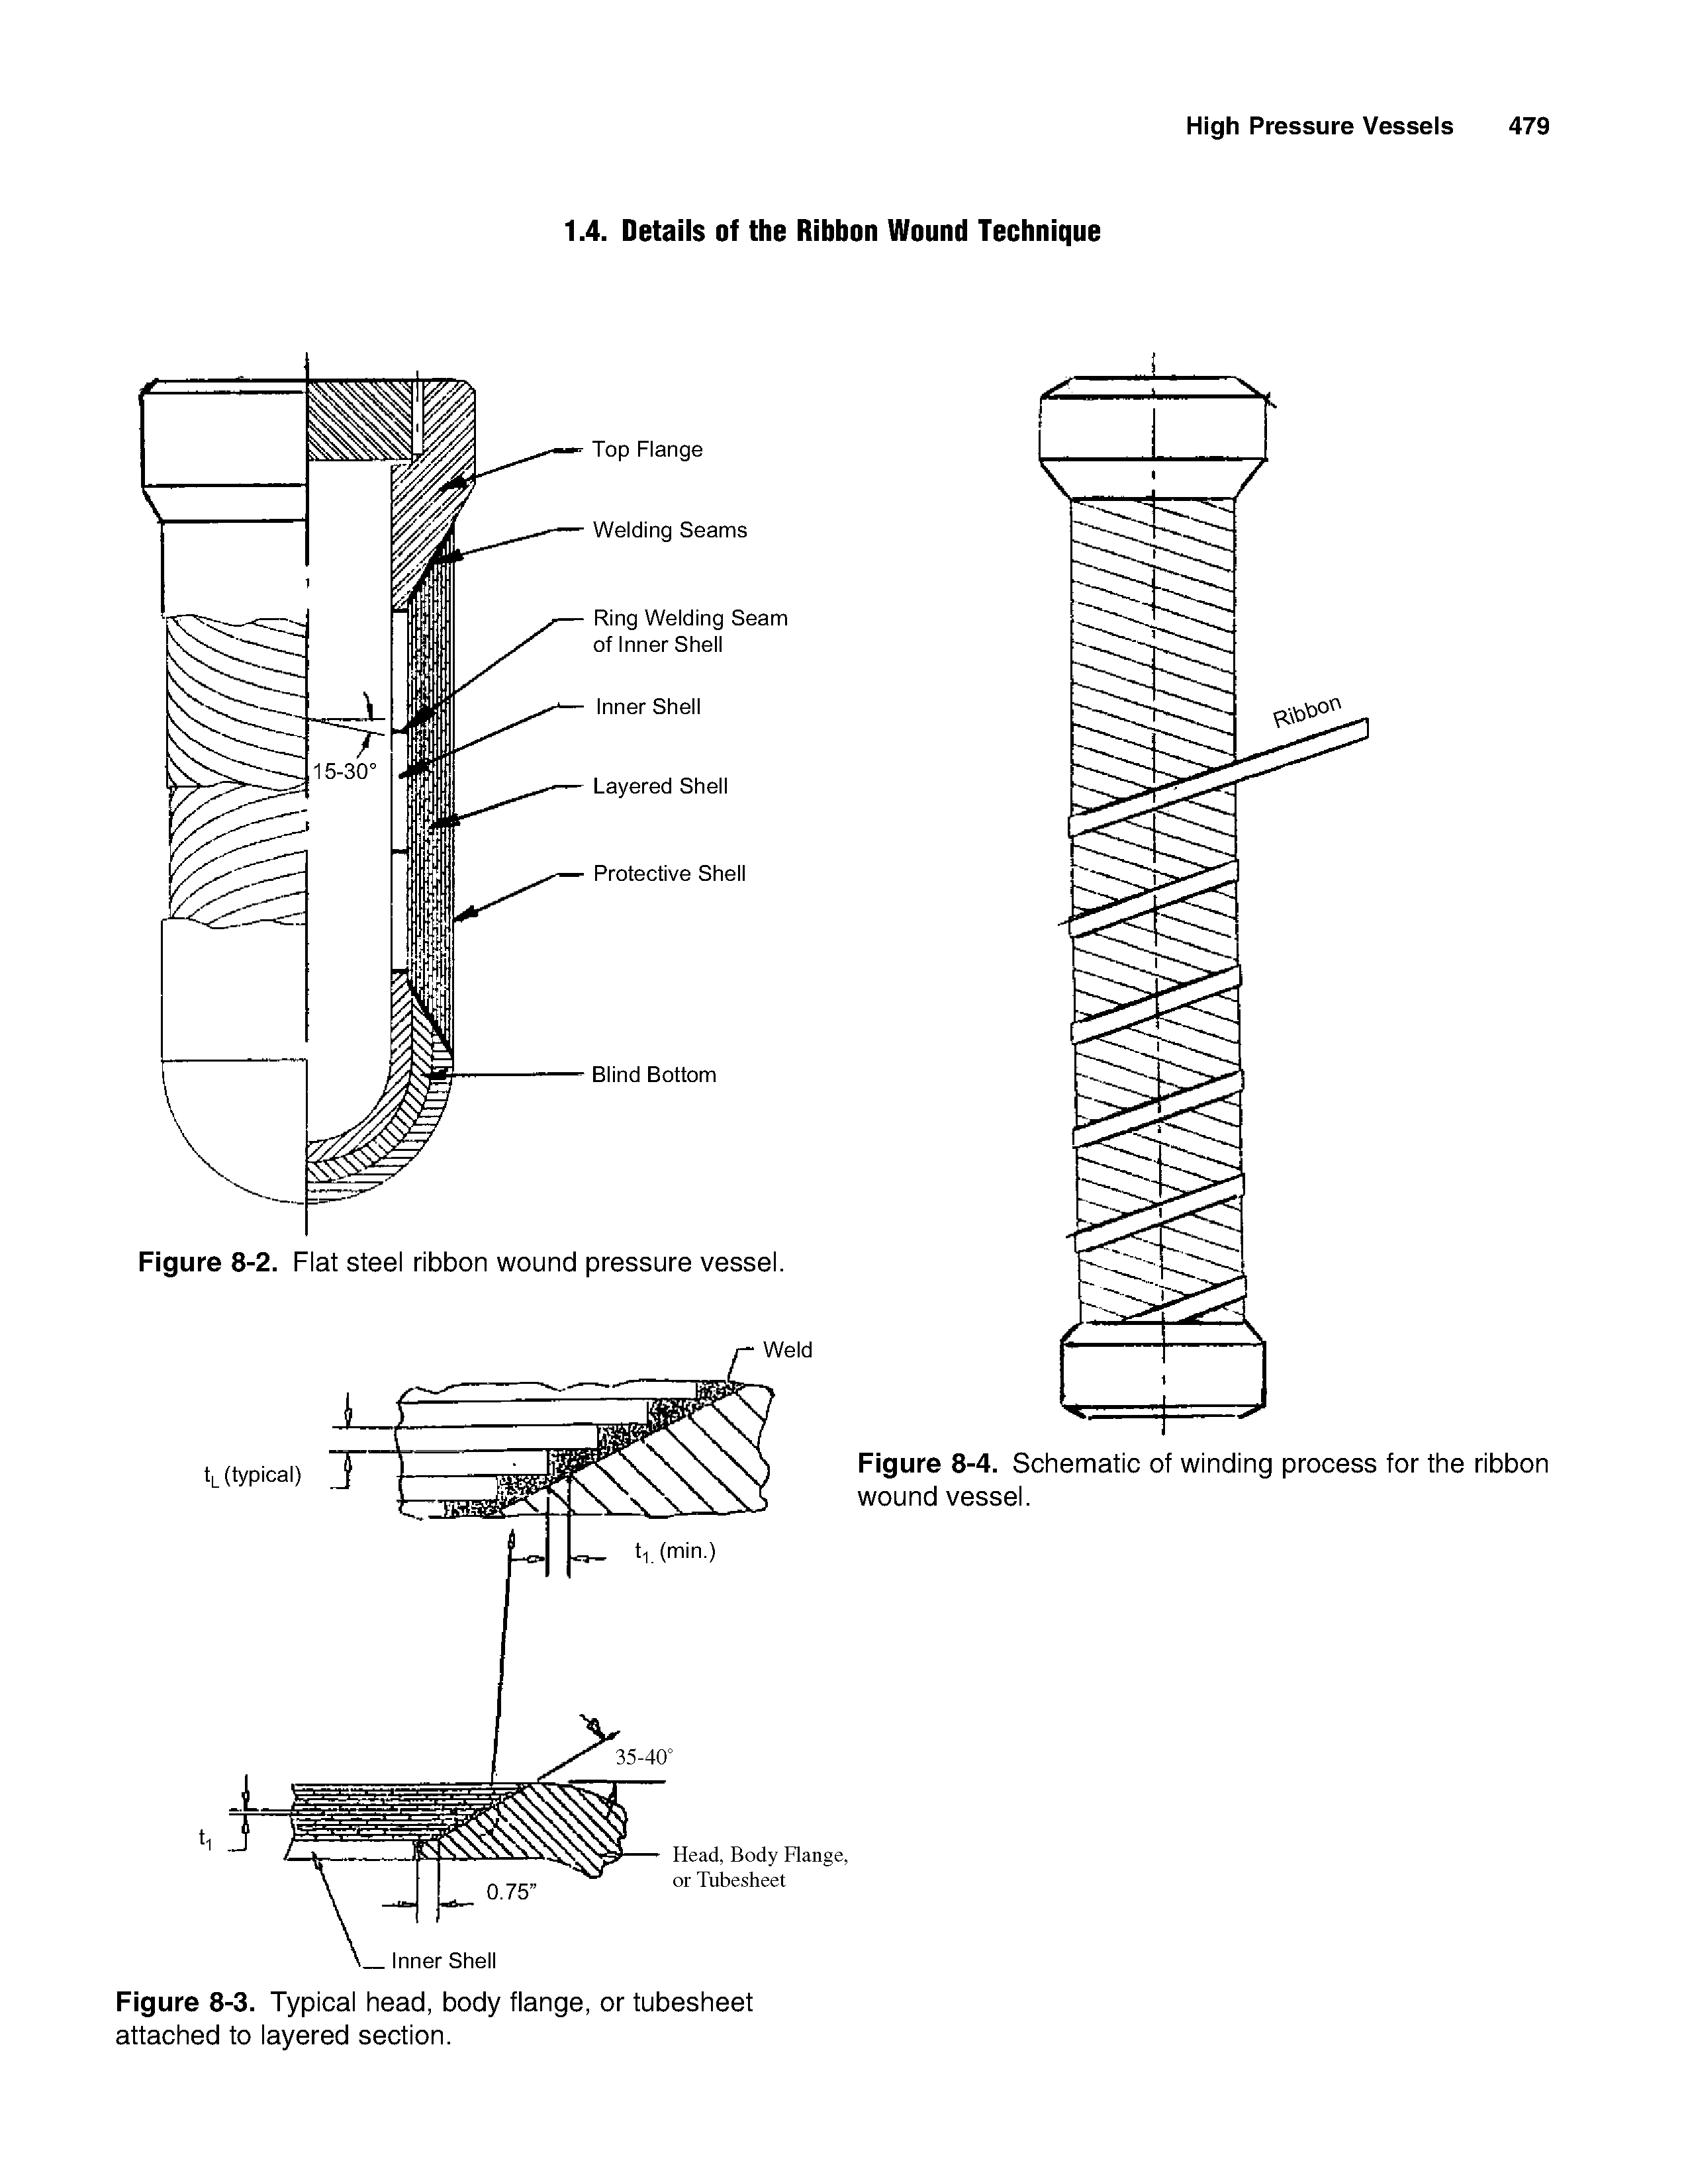 Figure 8-2. Flat steel ribbon wound pressure vessel.